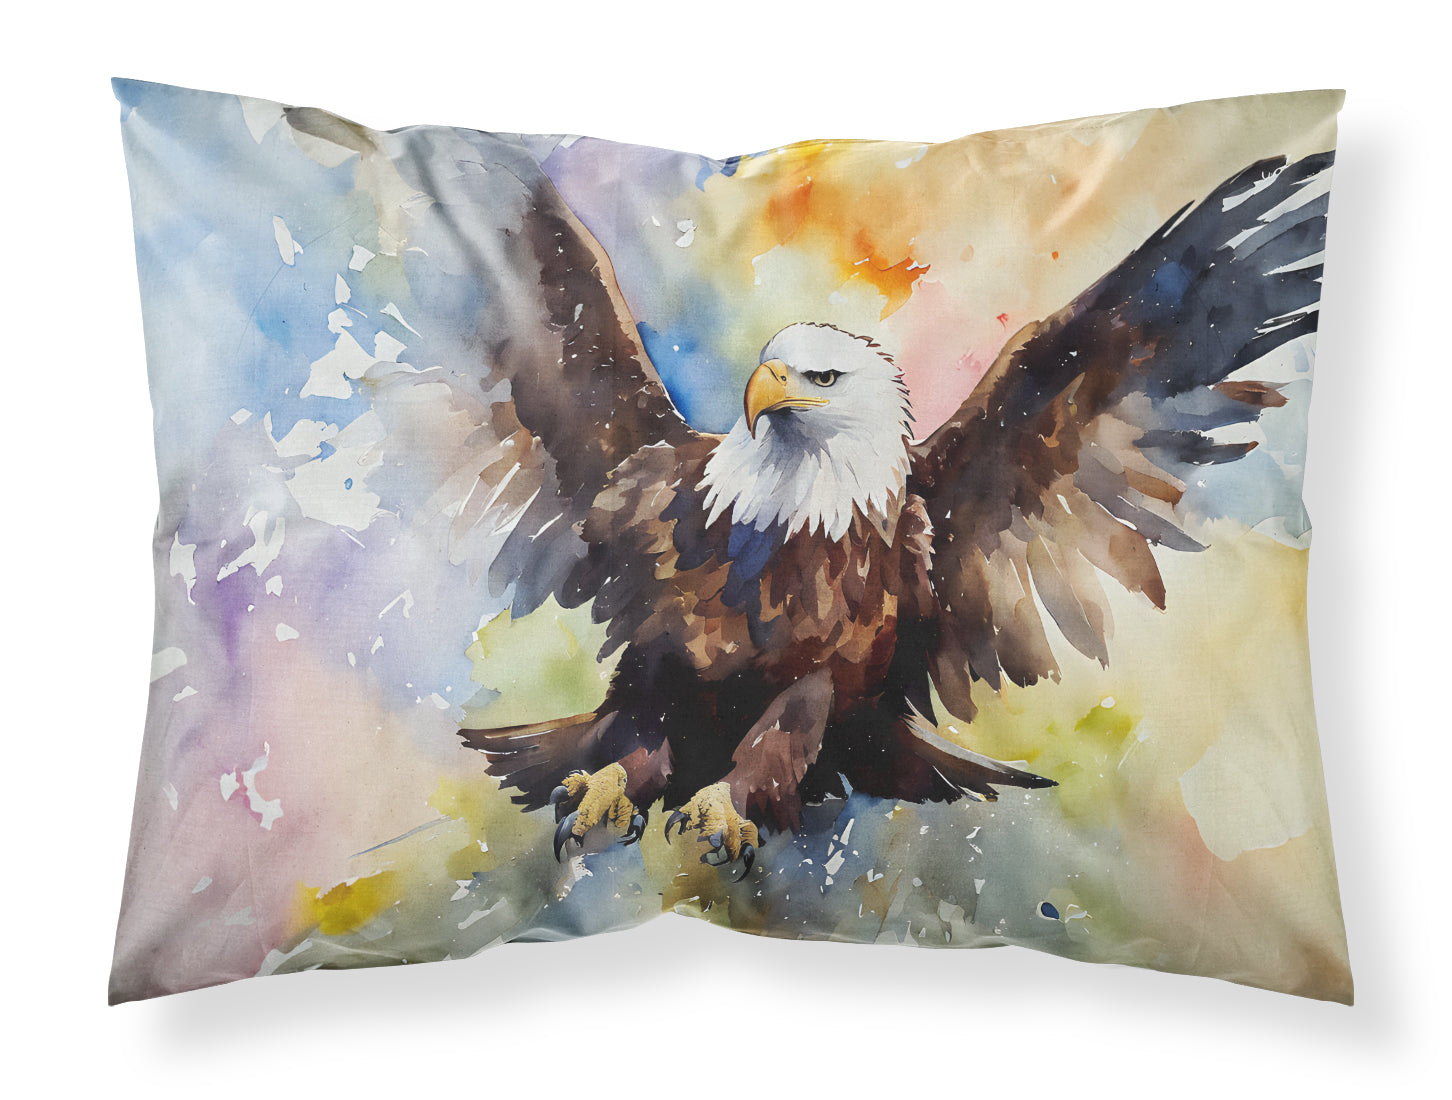 Buy this Eagle Standard Pillowcase